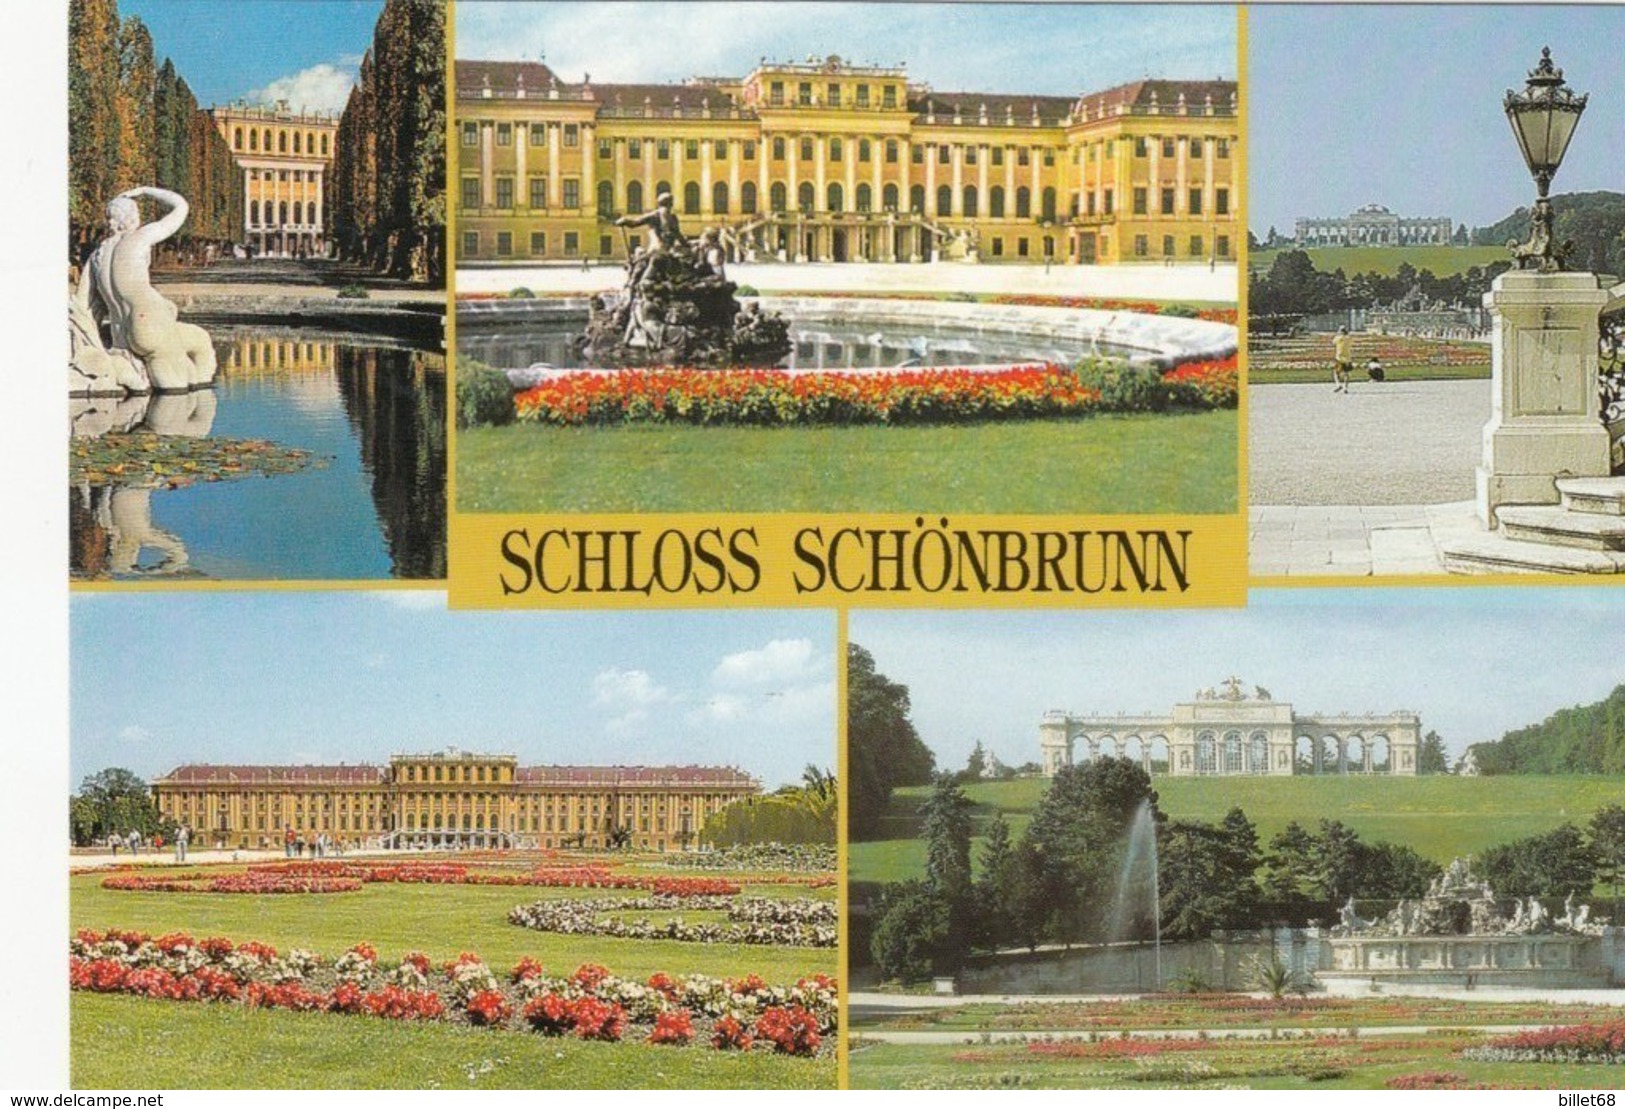 WIEN - SCHLOSS SCHONBRUNN - Österreich - Ungelaufen - Schönbrunn Palace